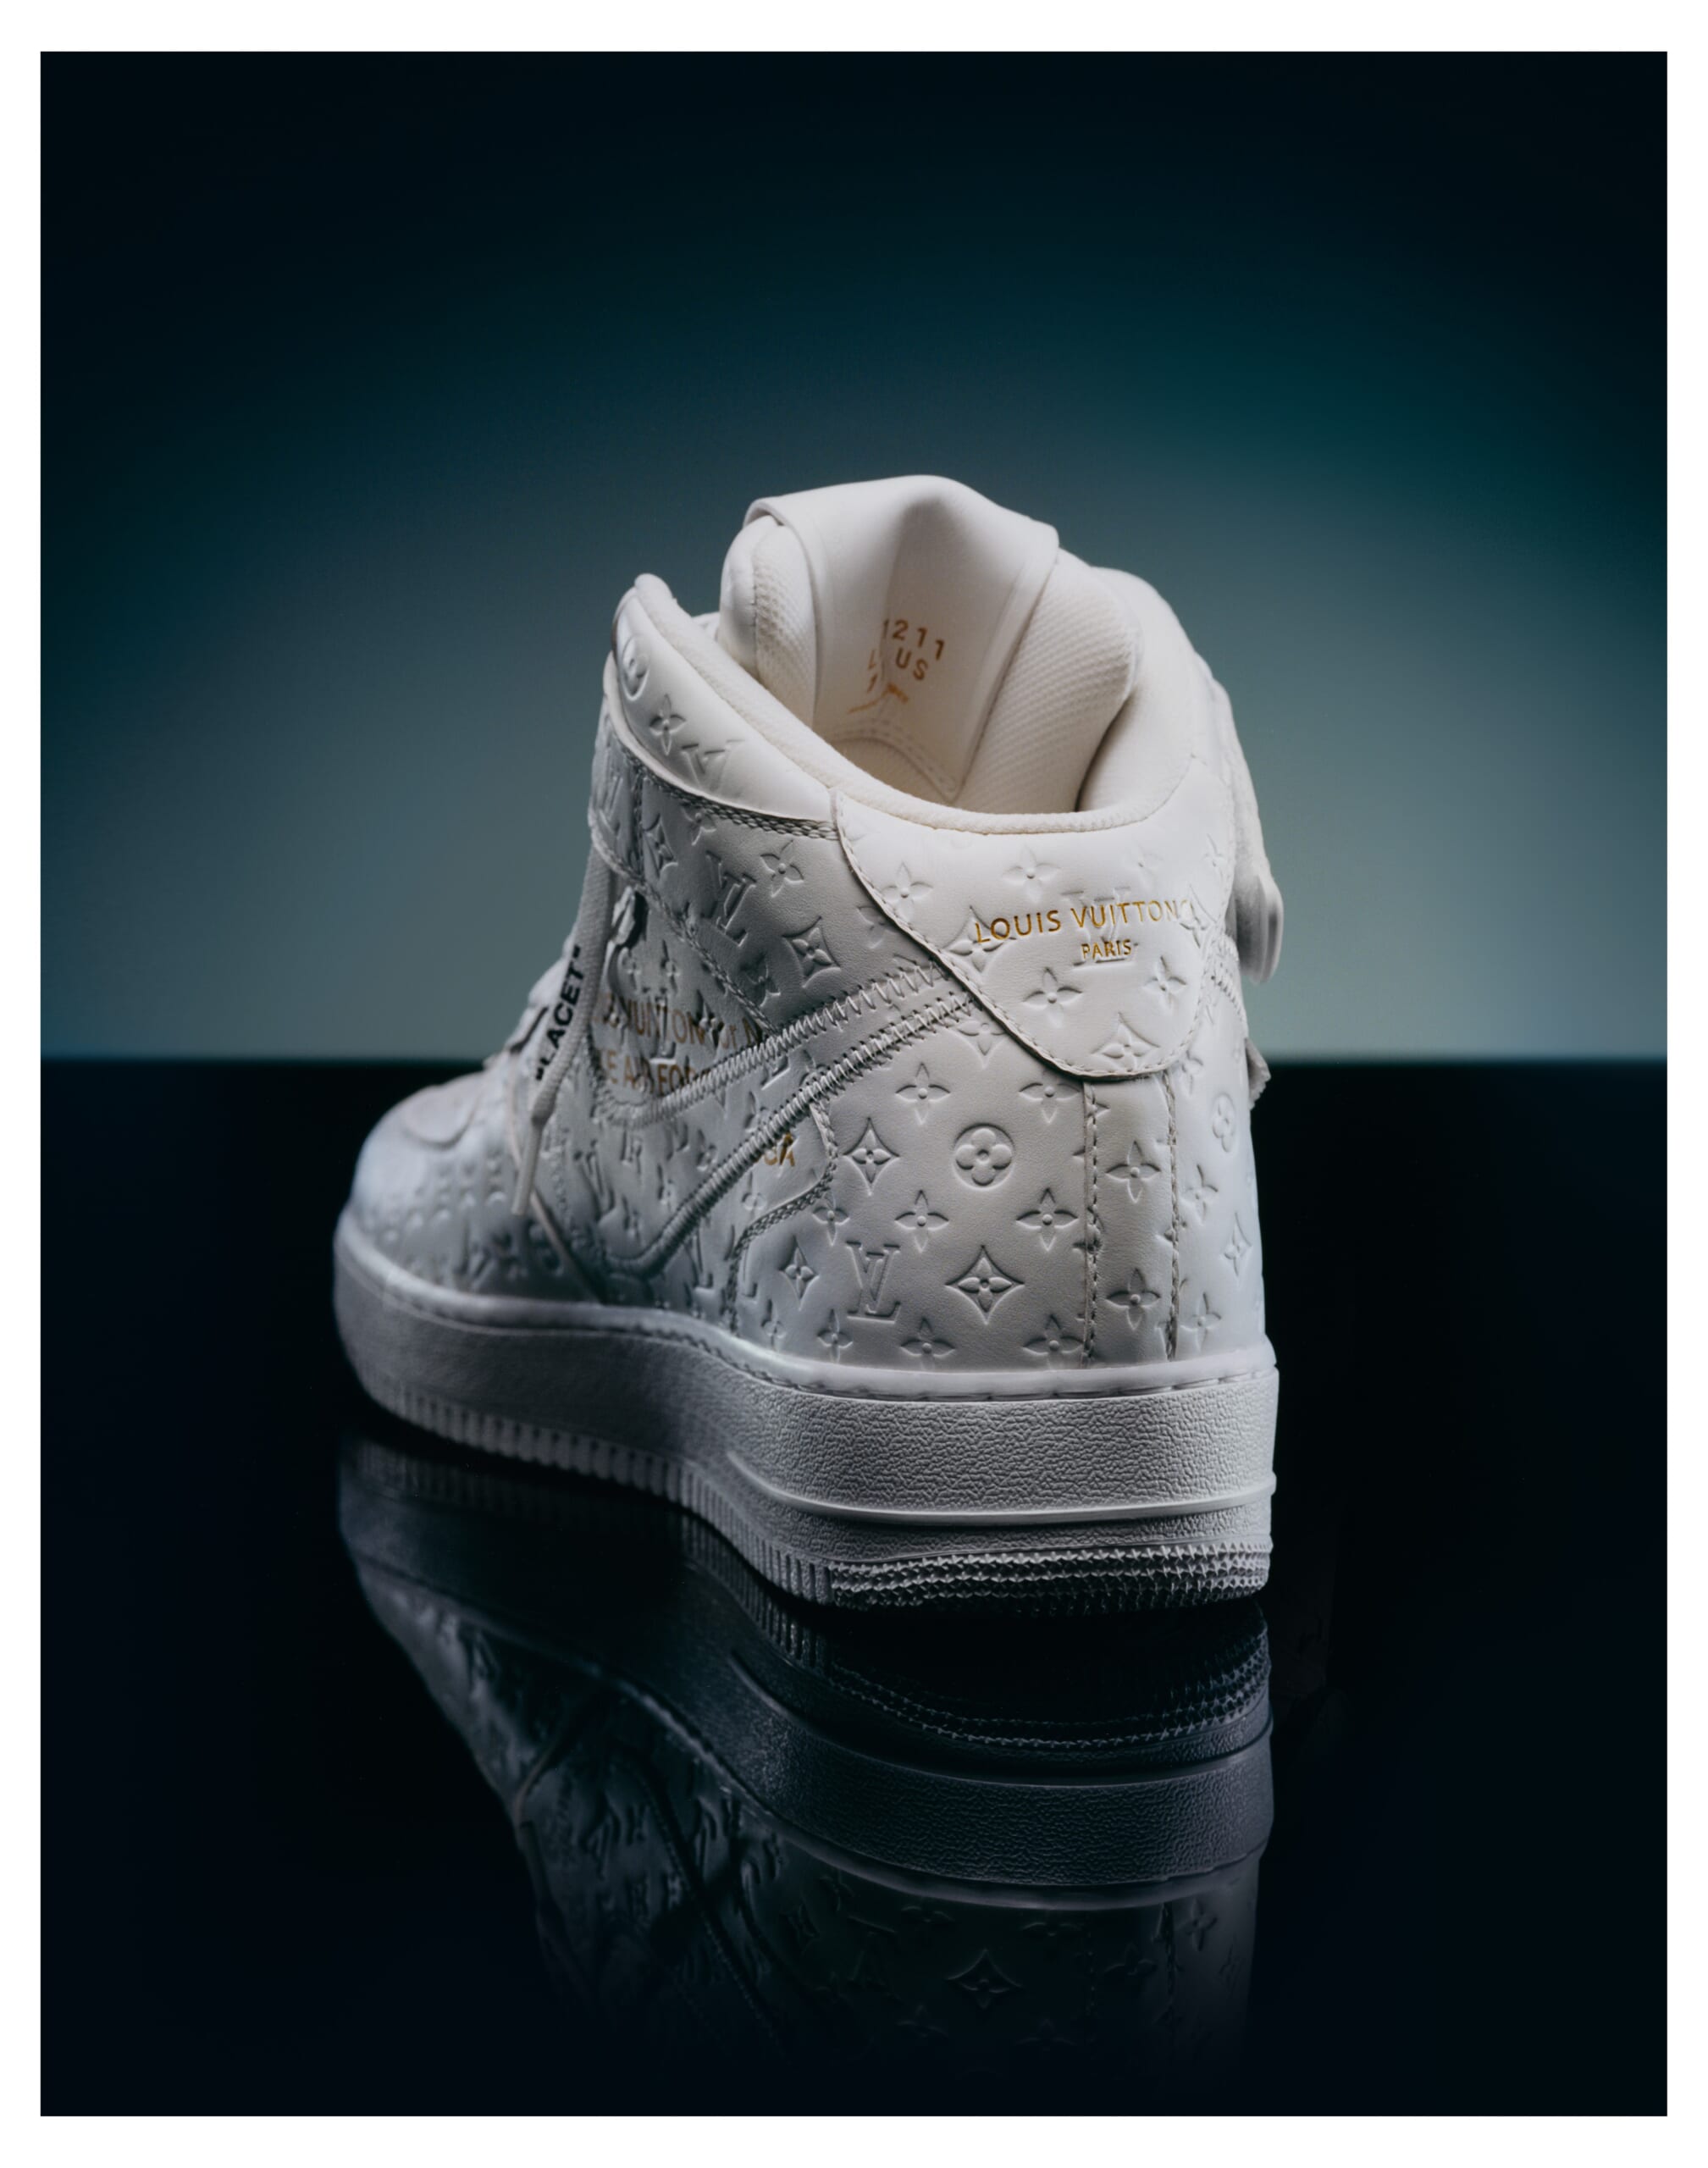 Nike x Louis Vuitton Air High Top - proalpaandomega - proalpaandomega